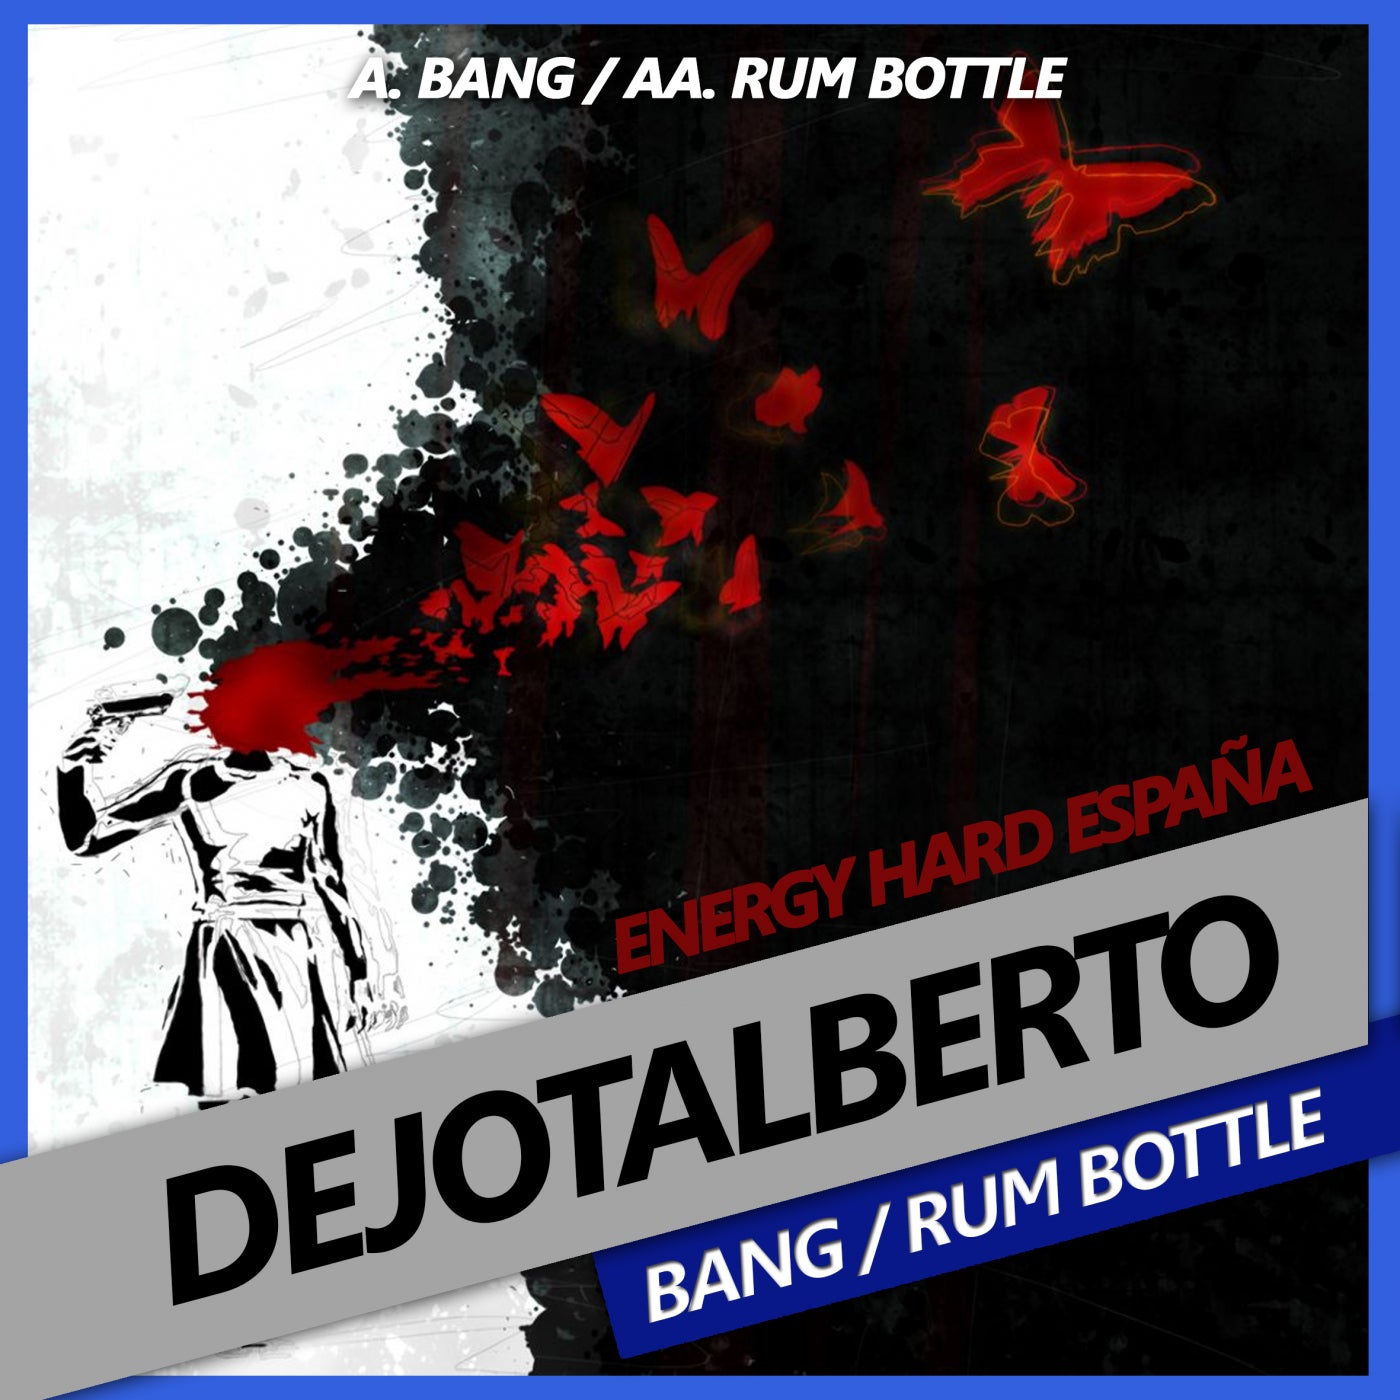 [EHE226] Dejotalberto - Bang / Rum Bottle E232c6fd-e2af-41b7-81eb-8e70ec02deab